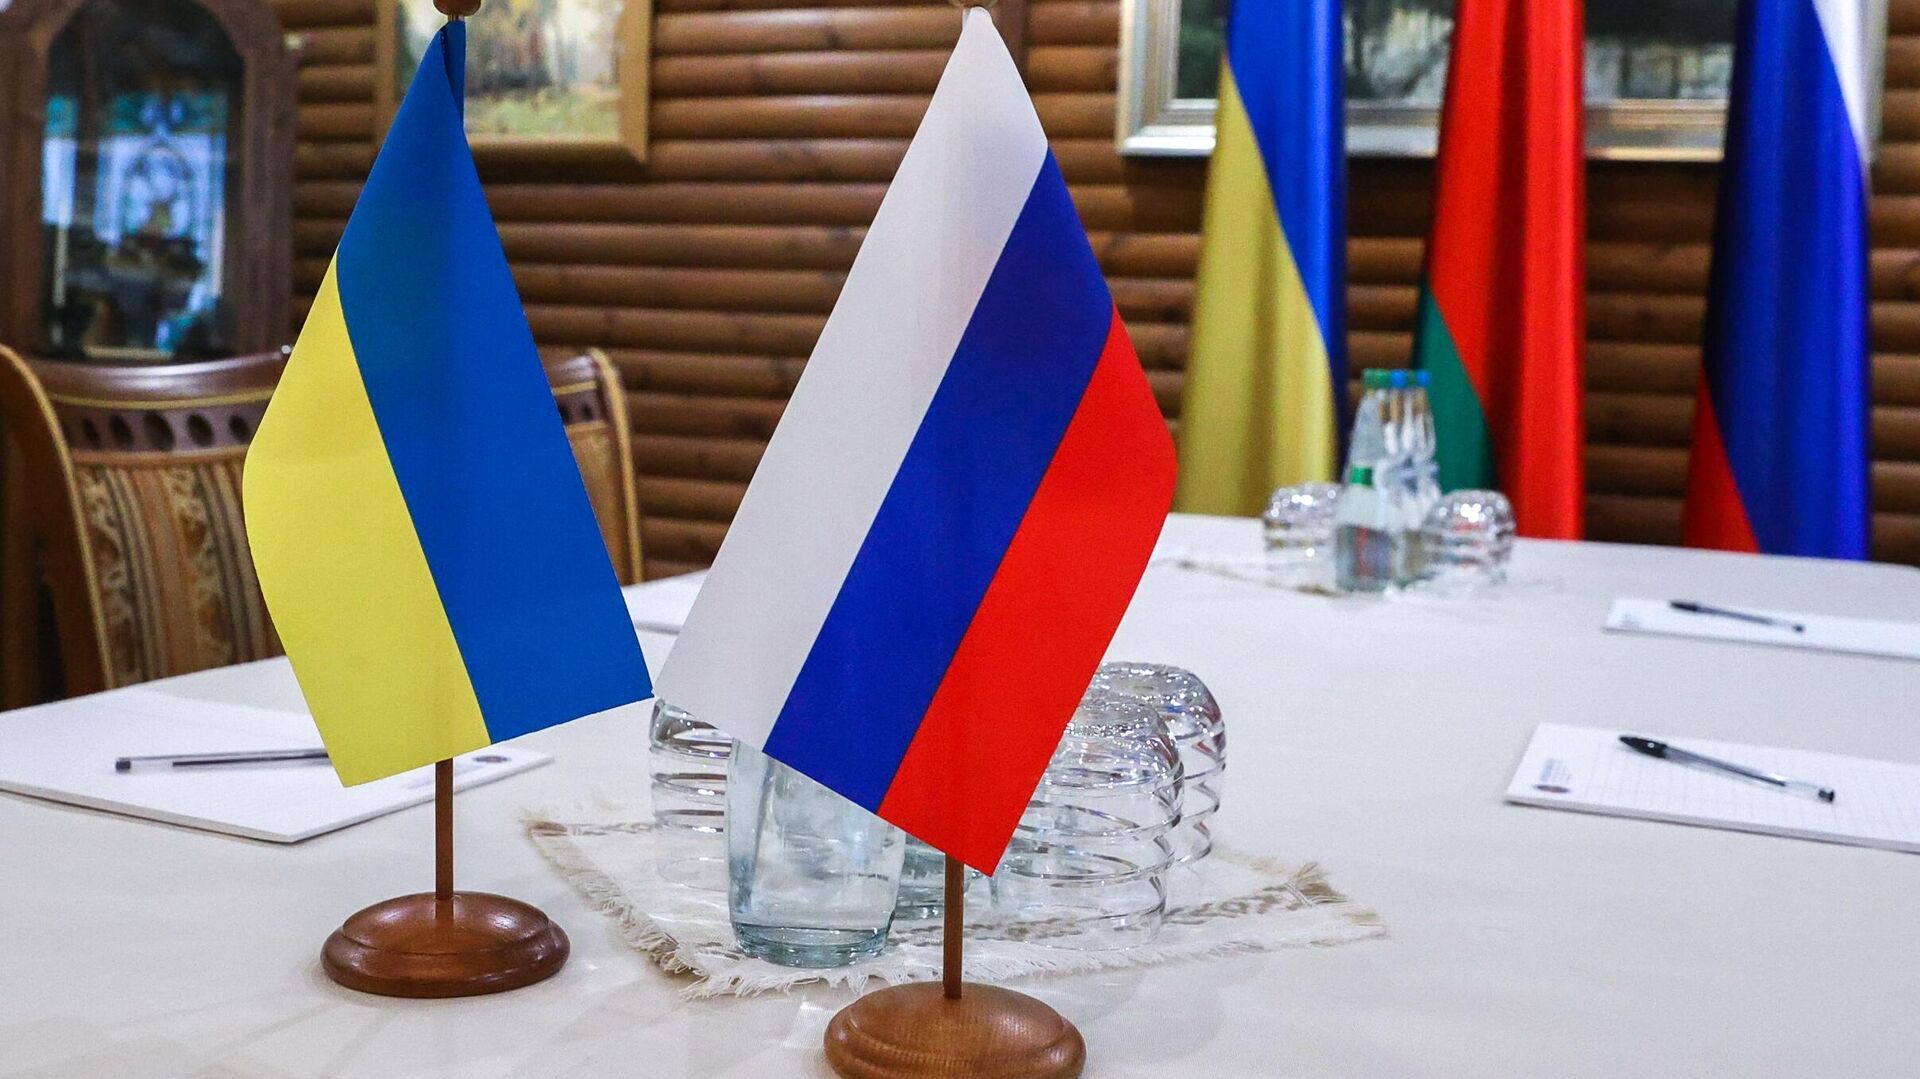 Russia-Ukraine peace negotiations in Belarus - Sputnik International, 1920, 22.04.2022